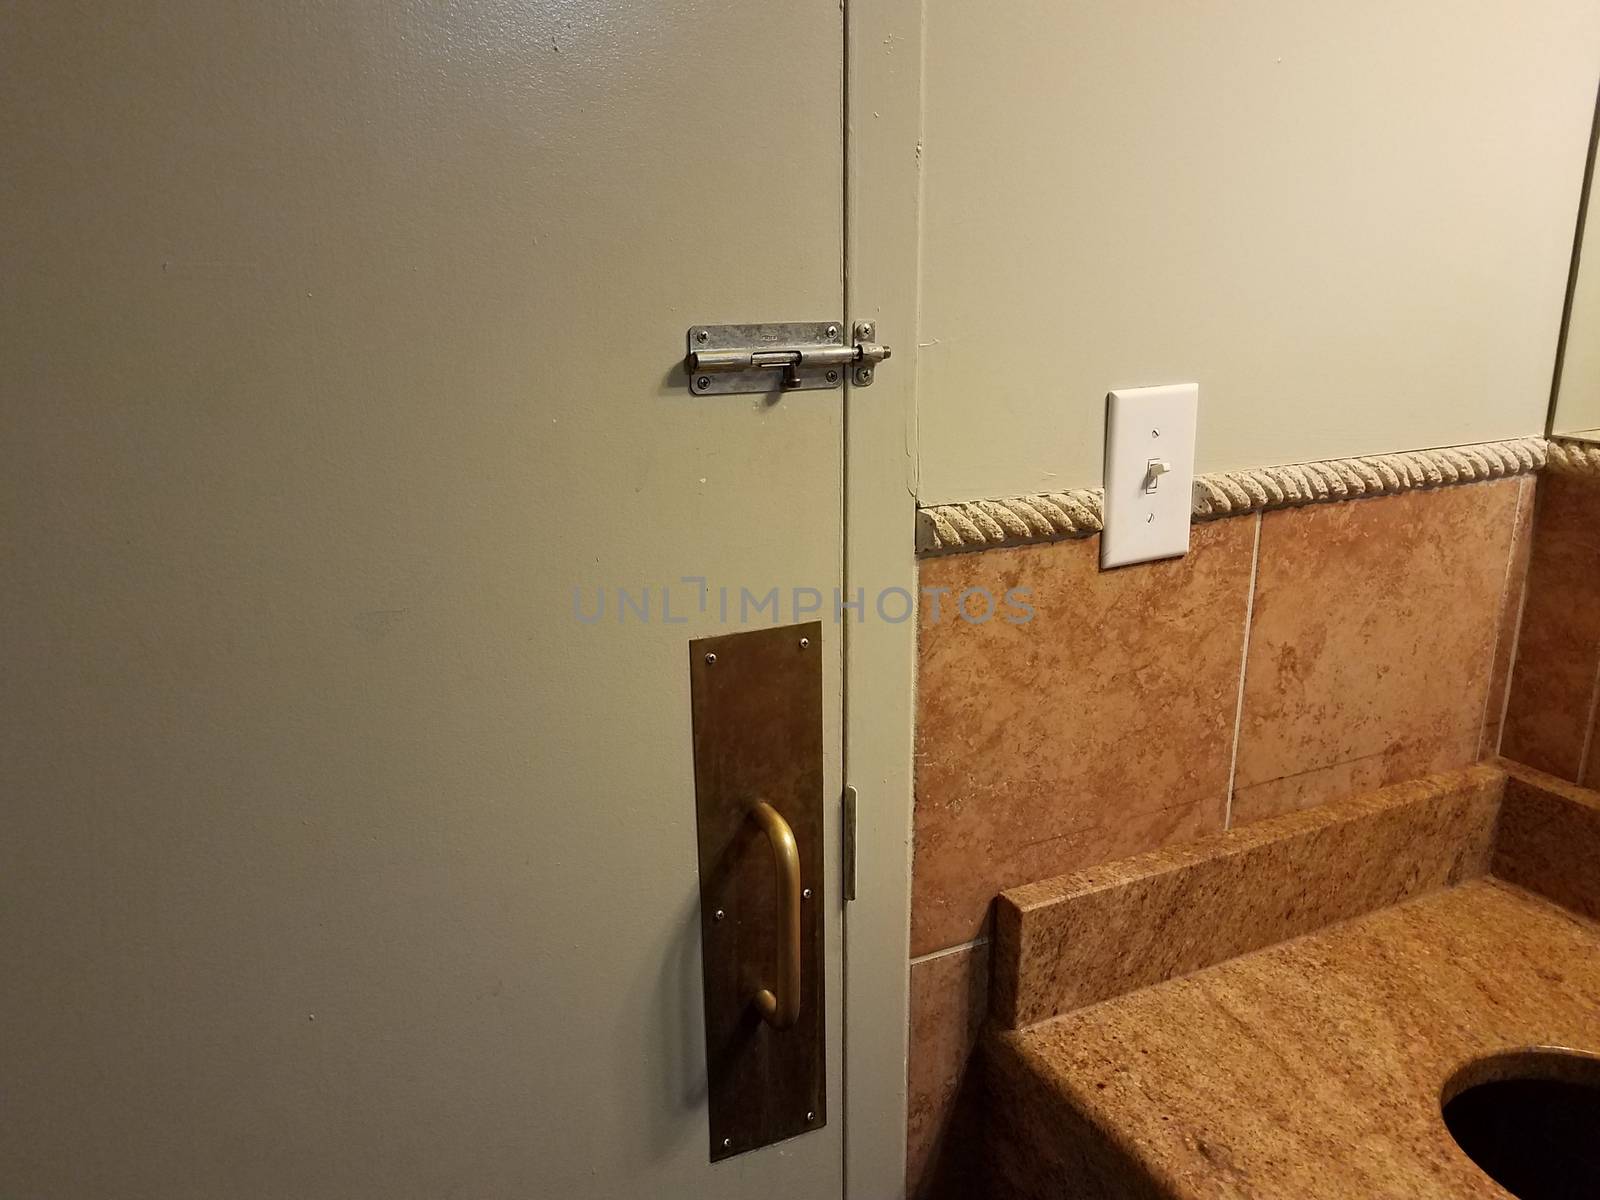 locked bathroom or restroom door with metal handle and counter